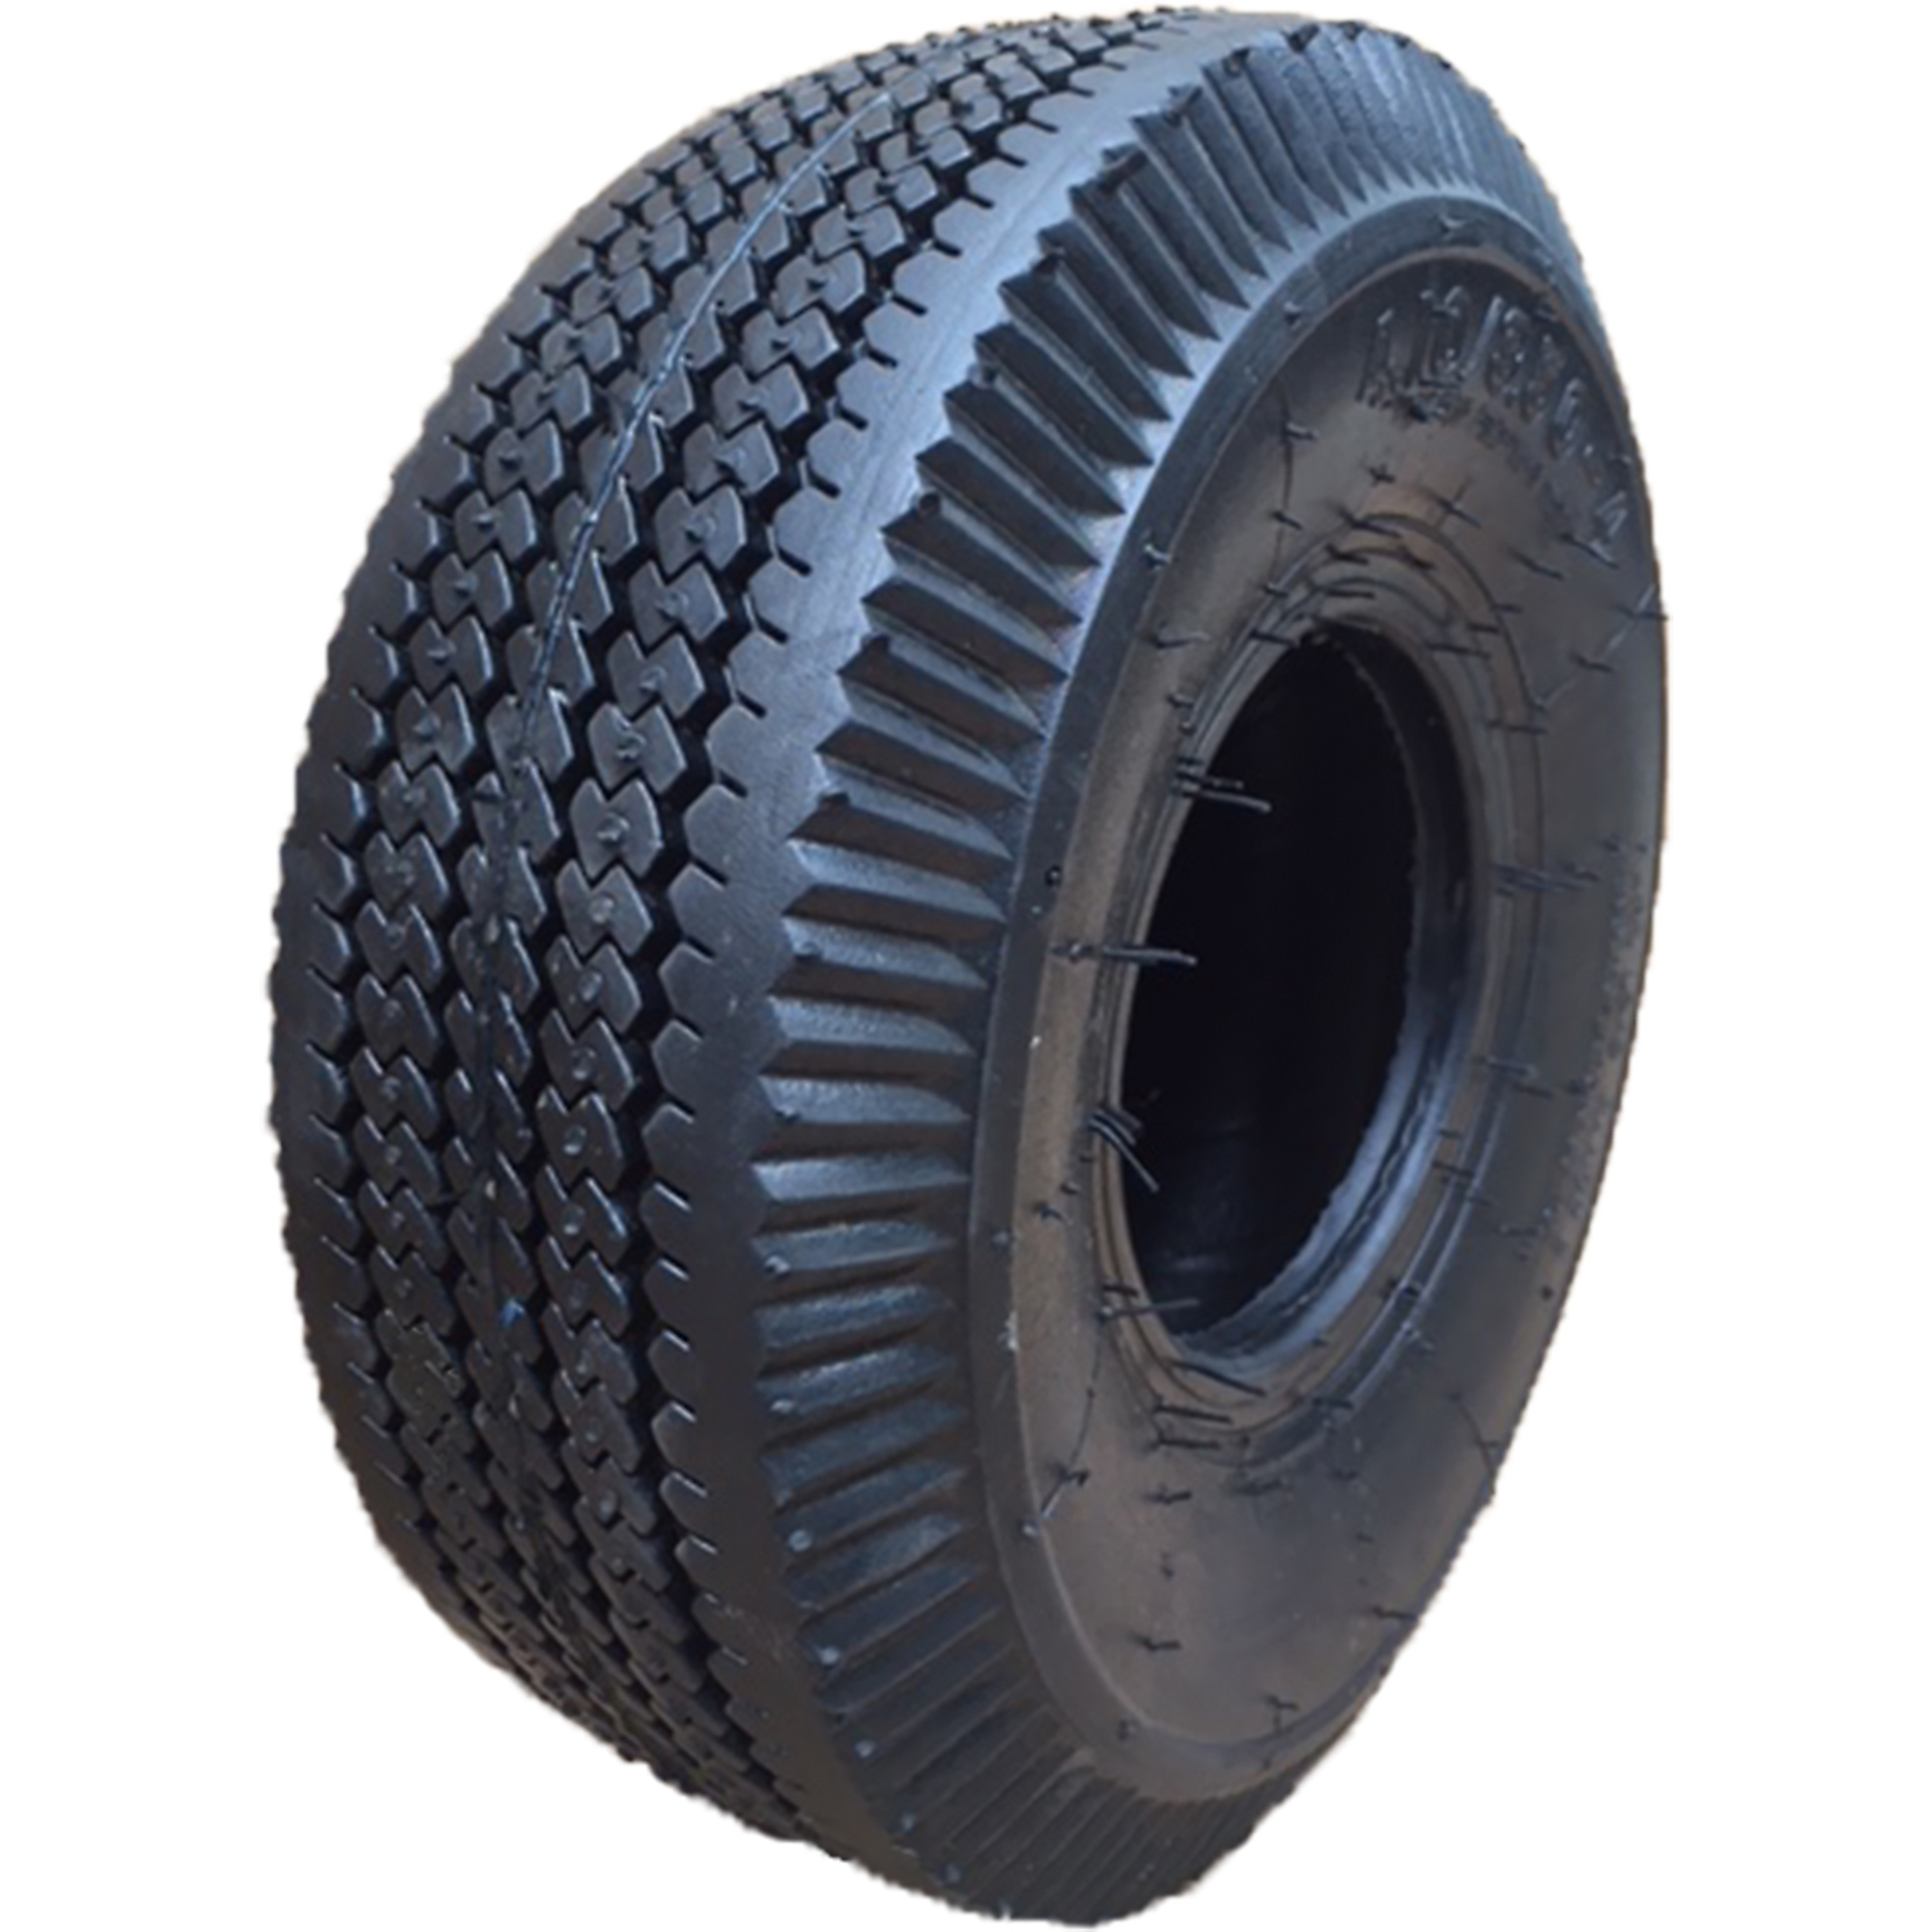 HI-RUN, Wheel Barrow Tire, Sawtooth, Tire Size 4.10/3.50-6 Load Range Rating B, Model WD1305